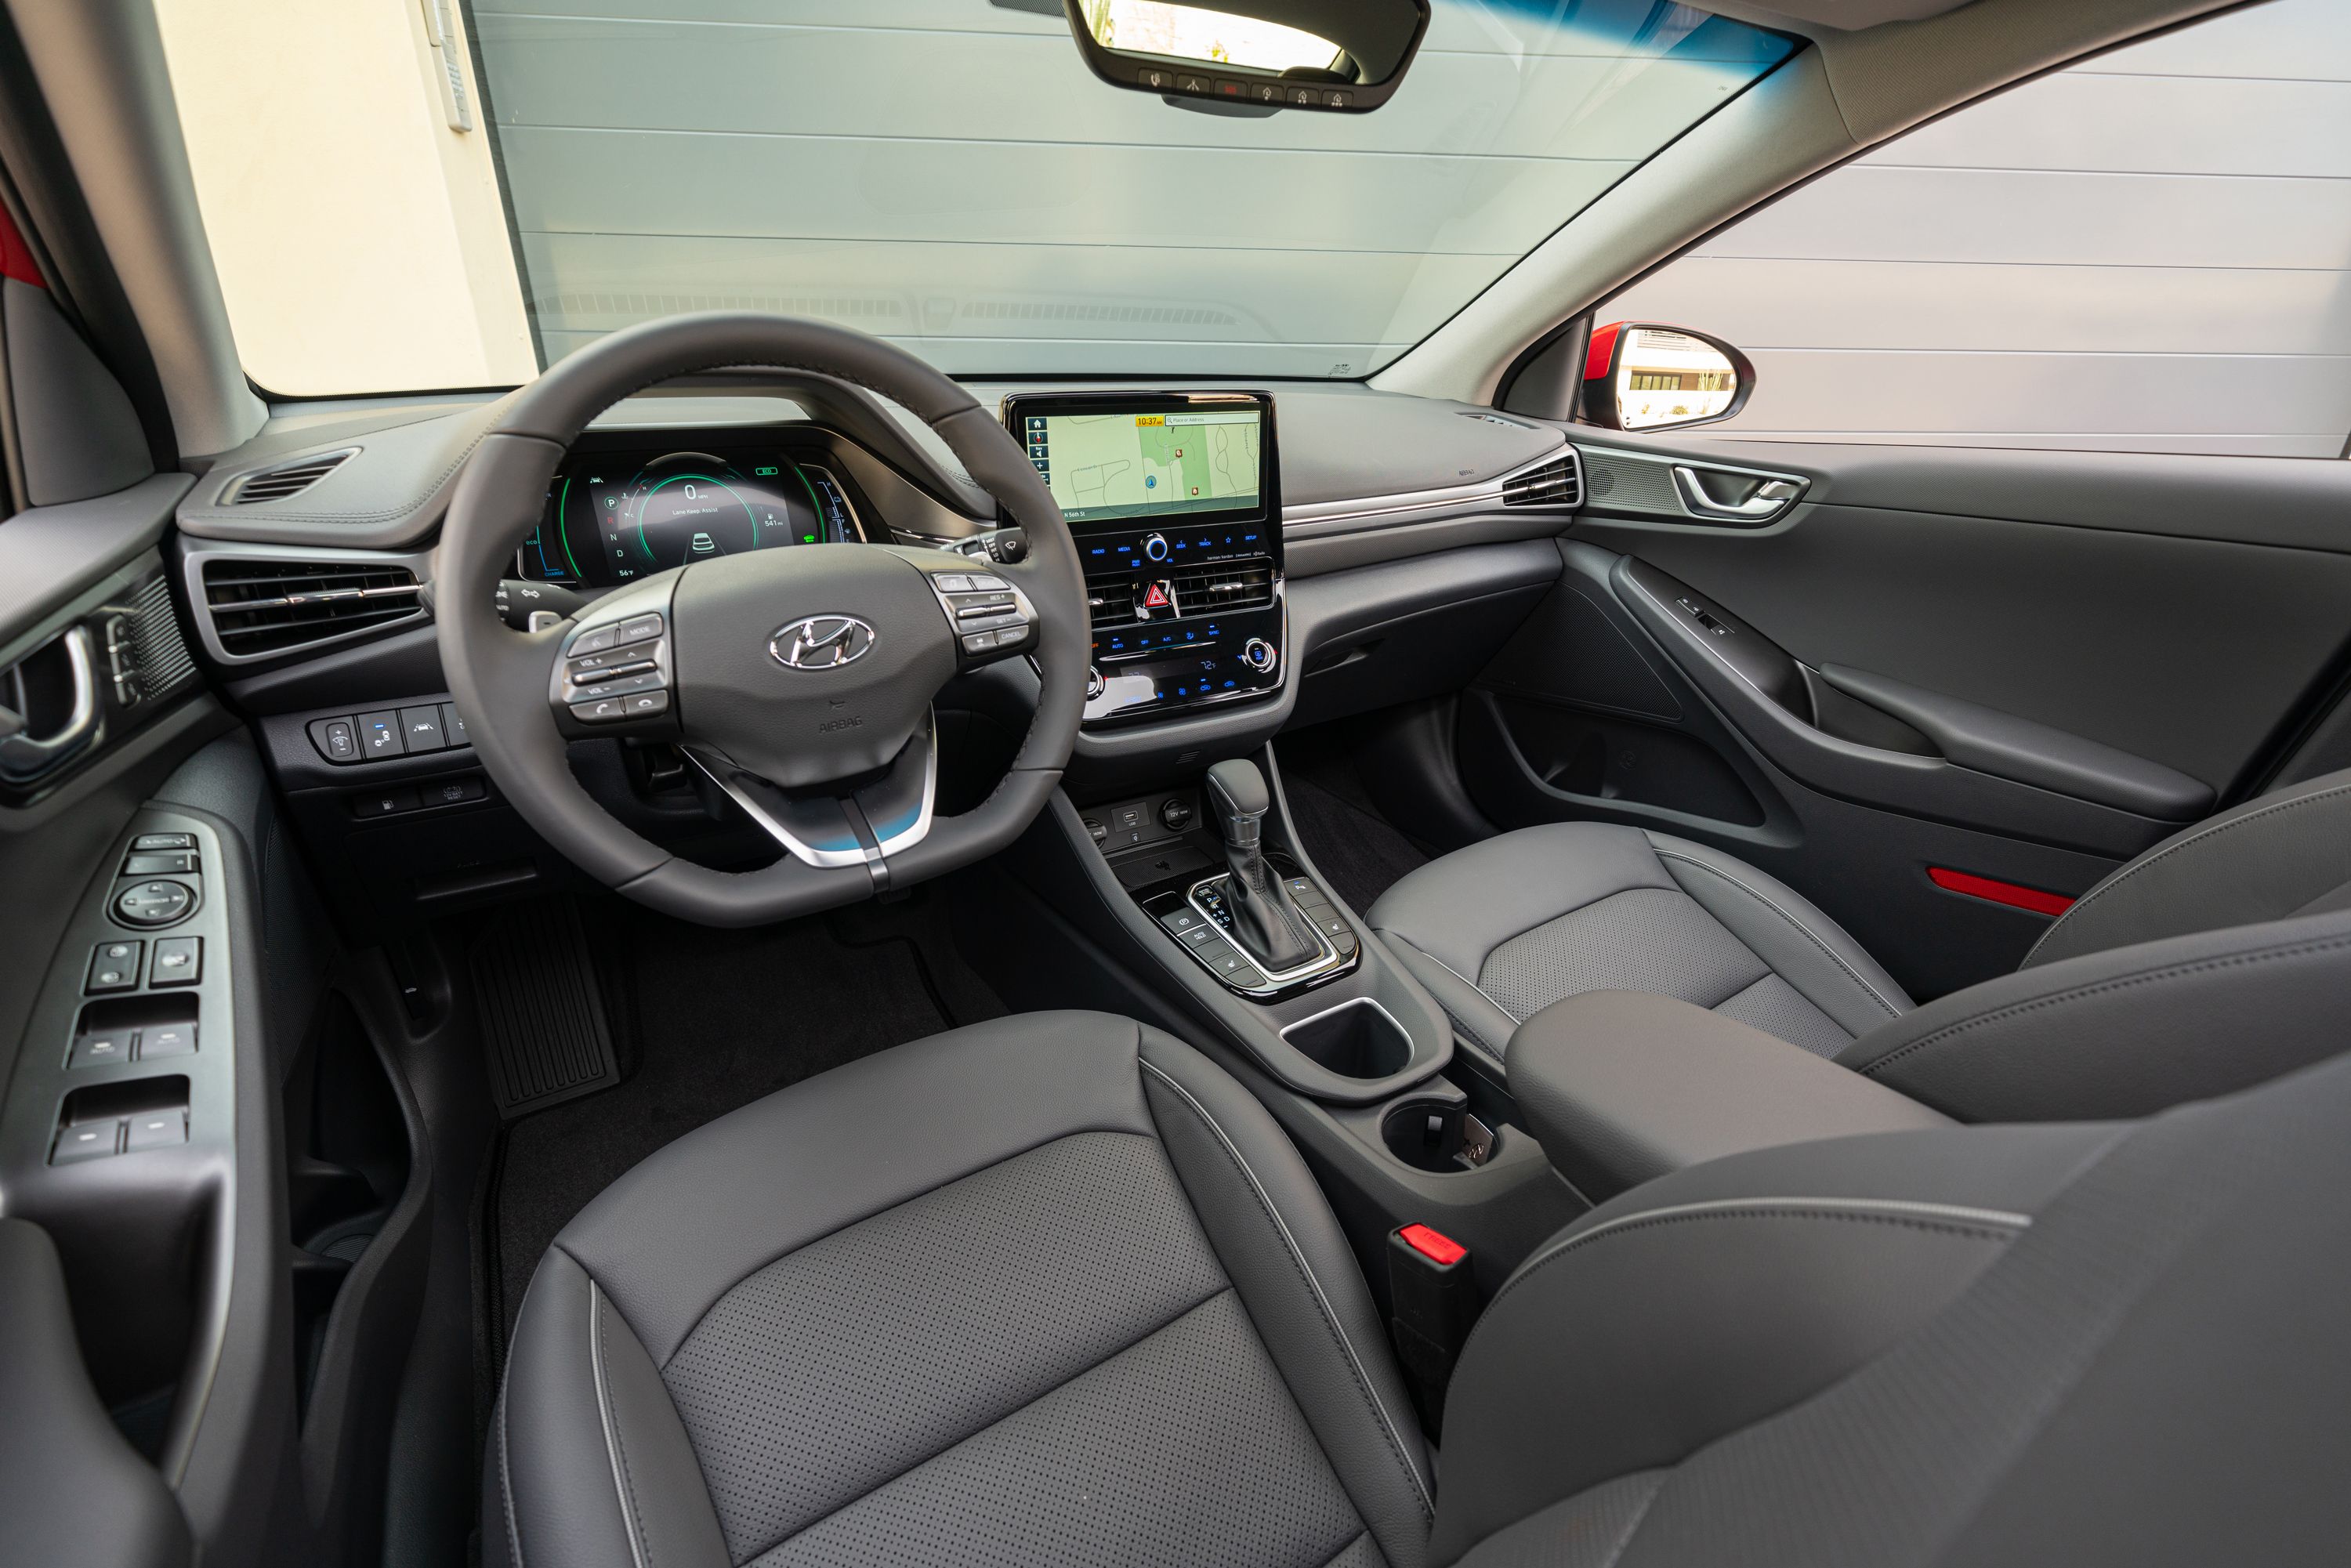 2021 Hyundai Ioniq Review, Pricing, and Specs